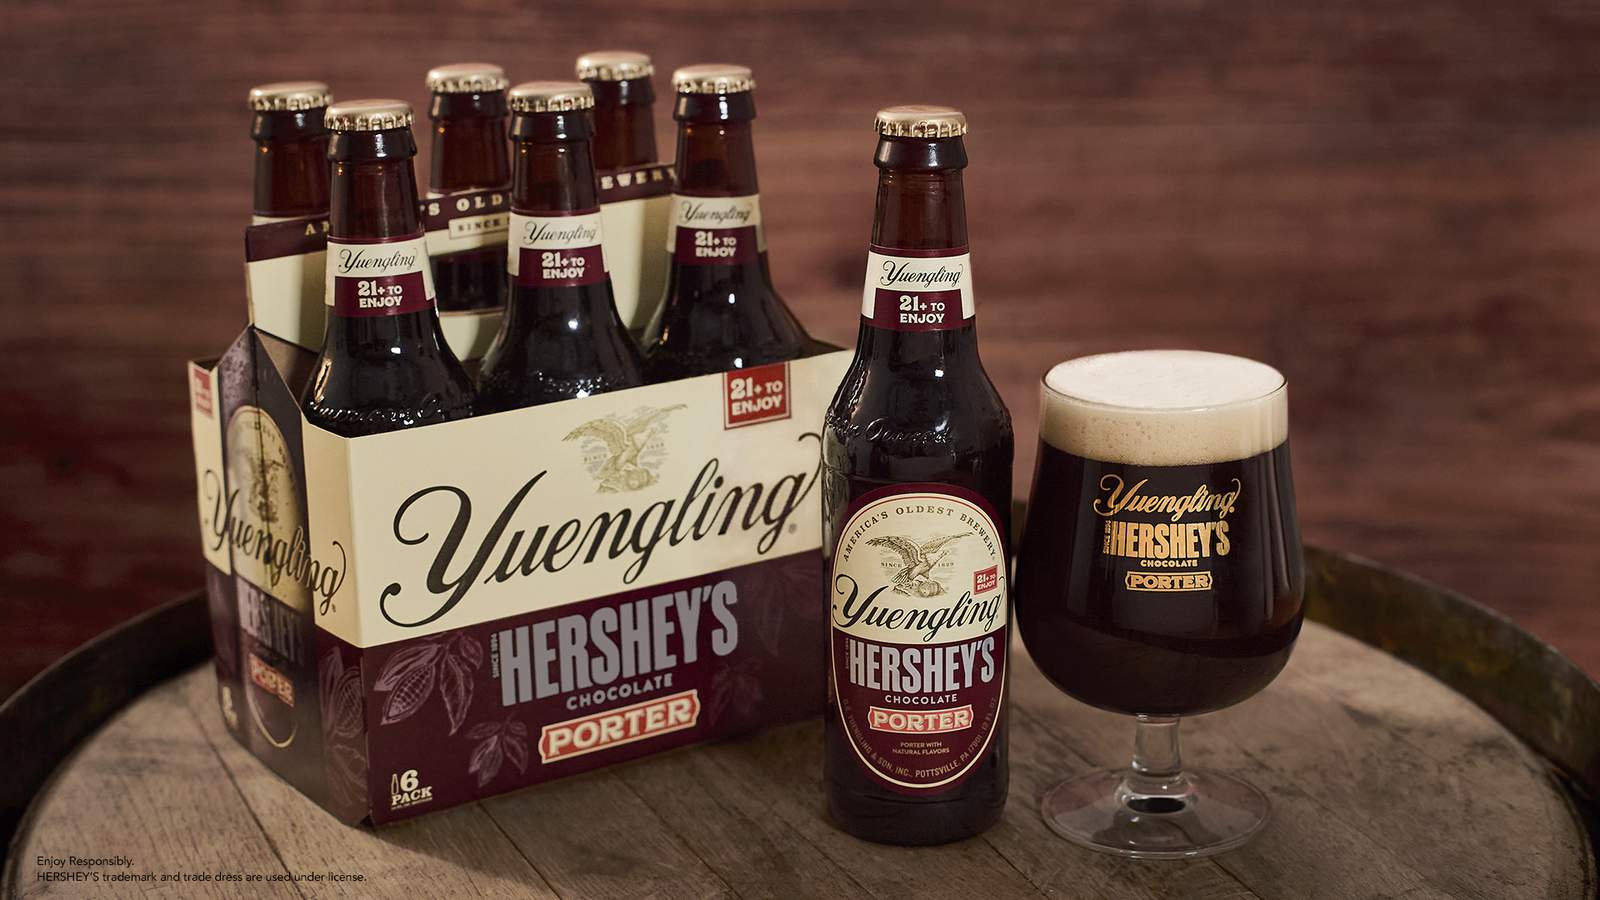 Yuengling Hershey’s chocolate beer is back